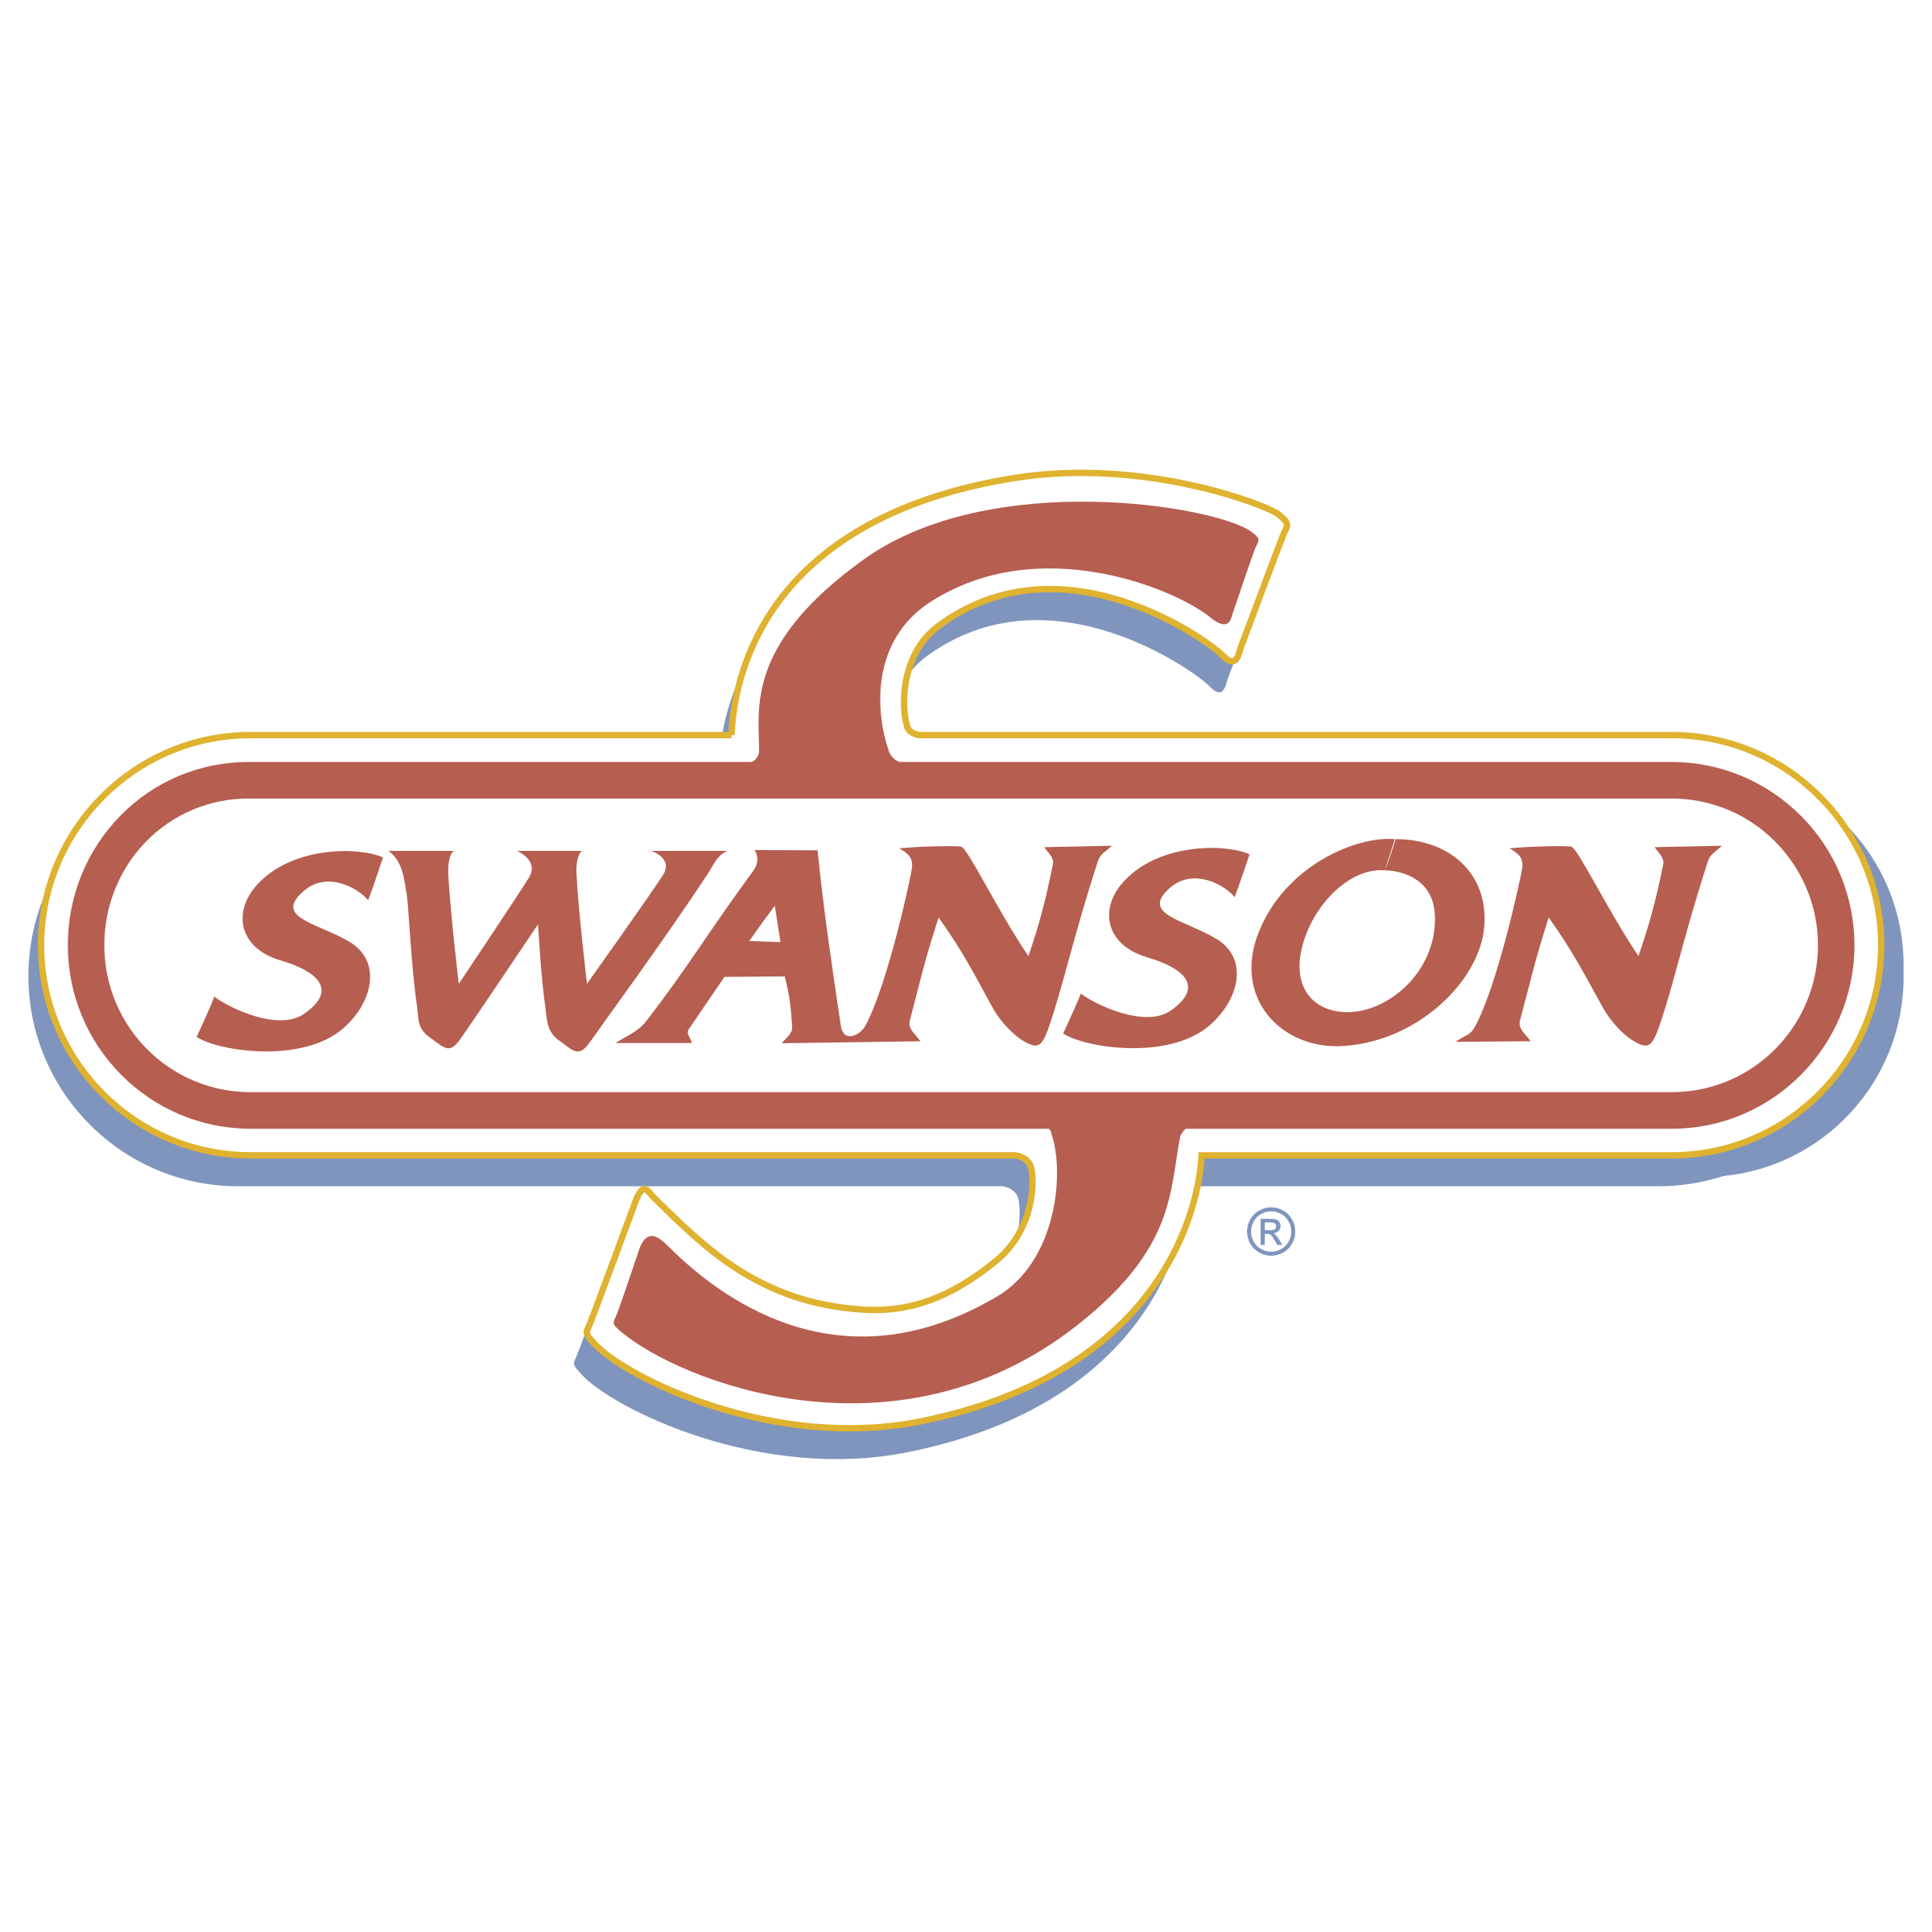 Swanson Logo - Swanson Logo PNG Transparent & SVG Vector - Freebie Supply